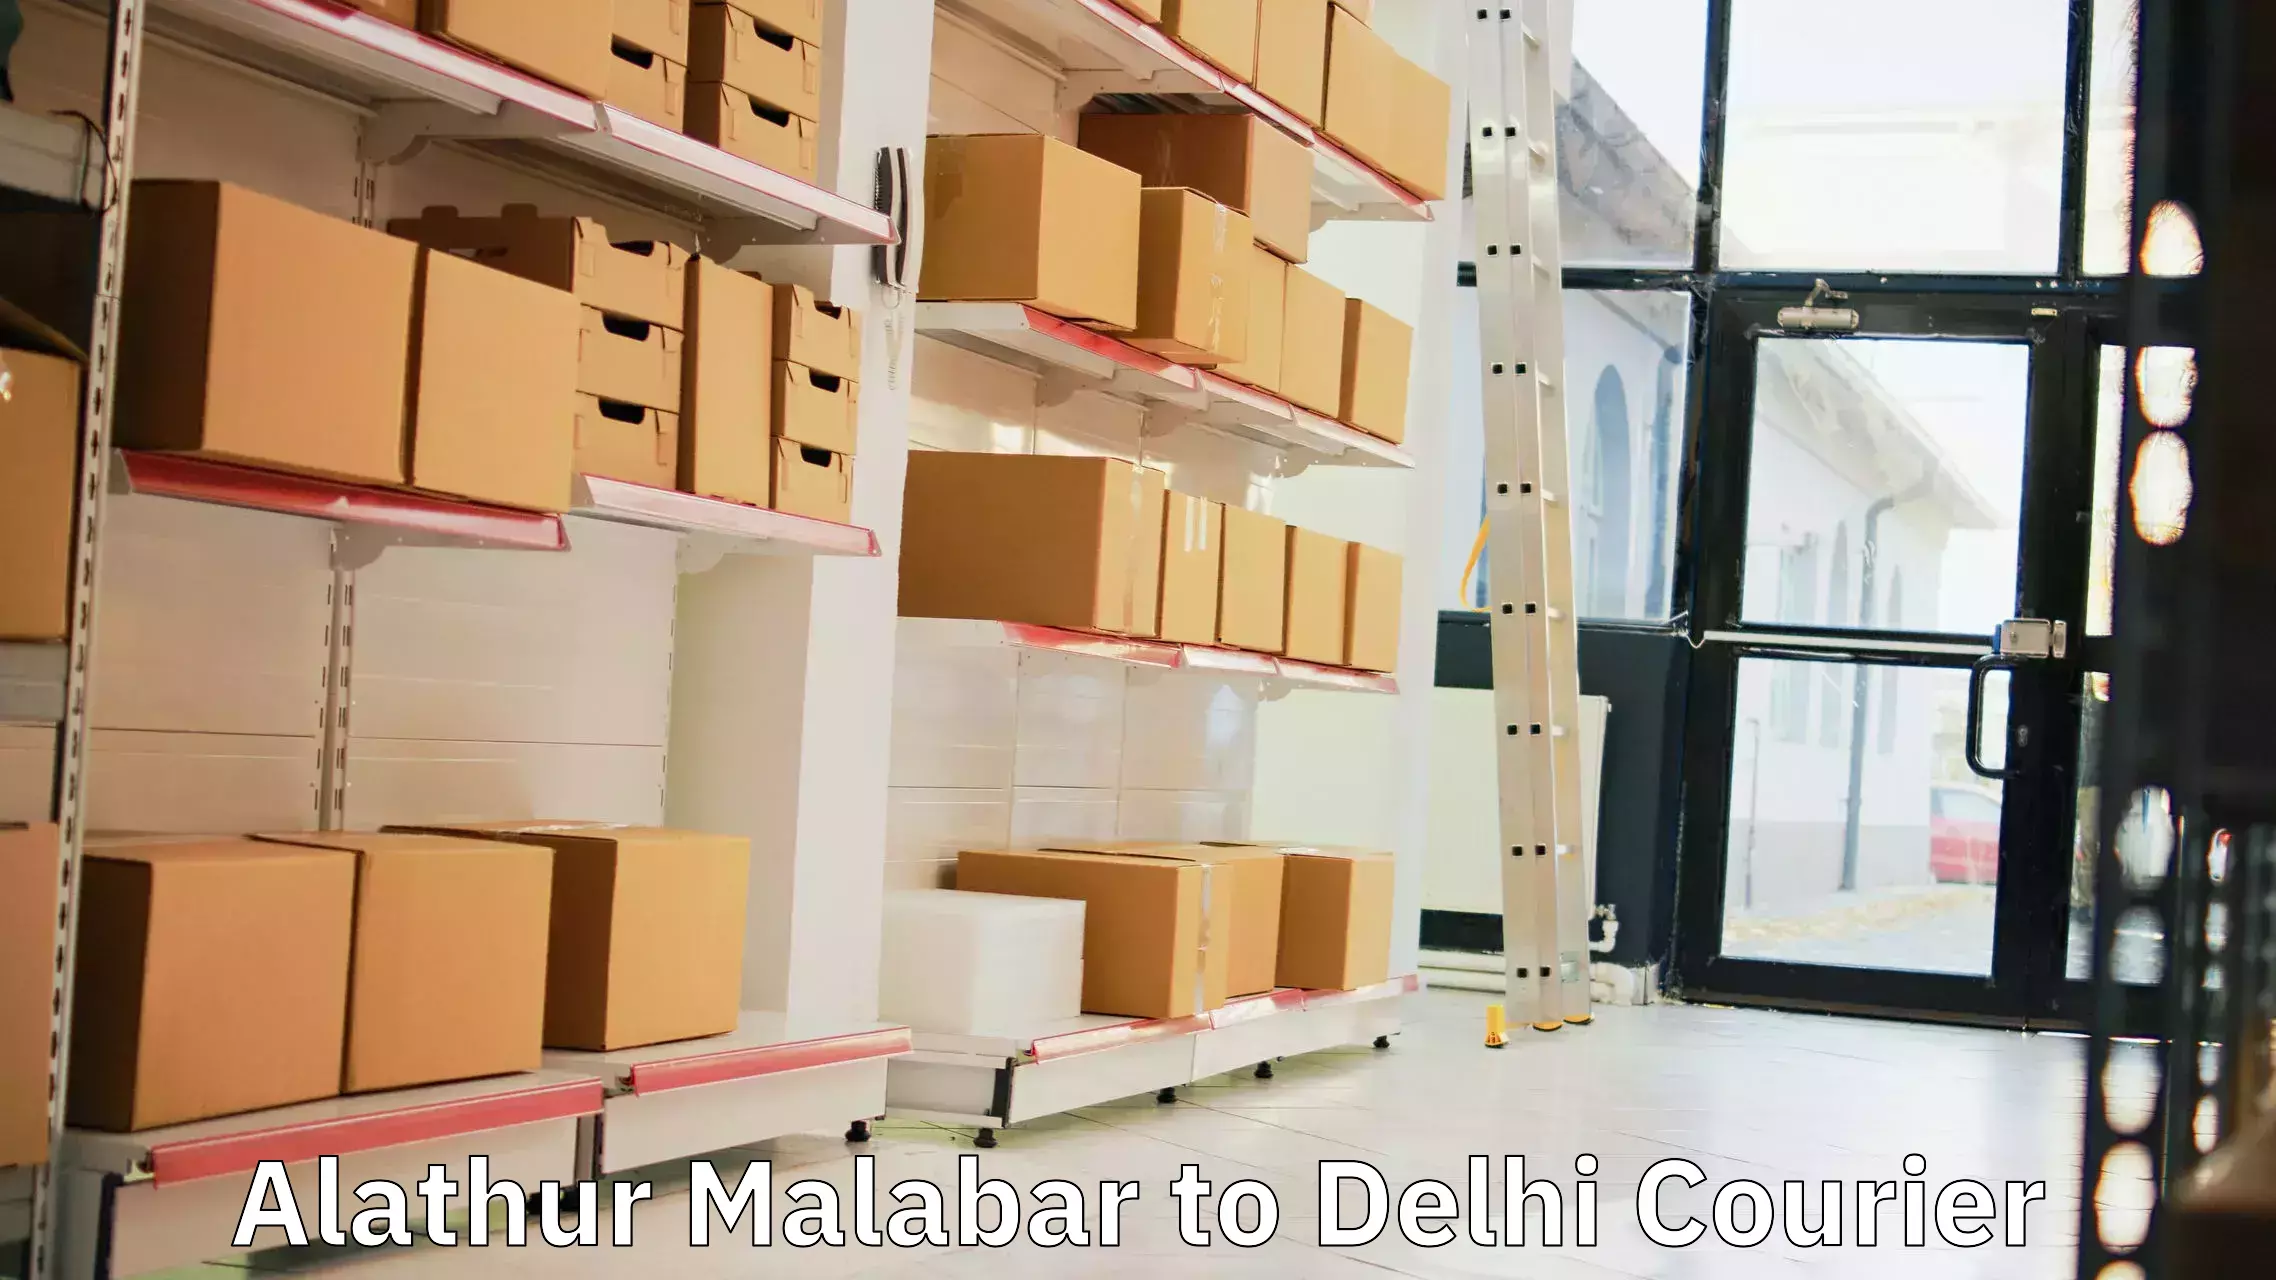 Premium courier solutions Alathur Malabar to Kalkaji